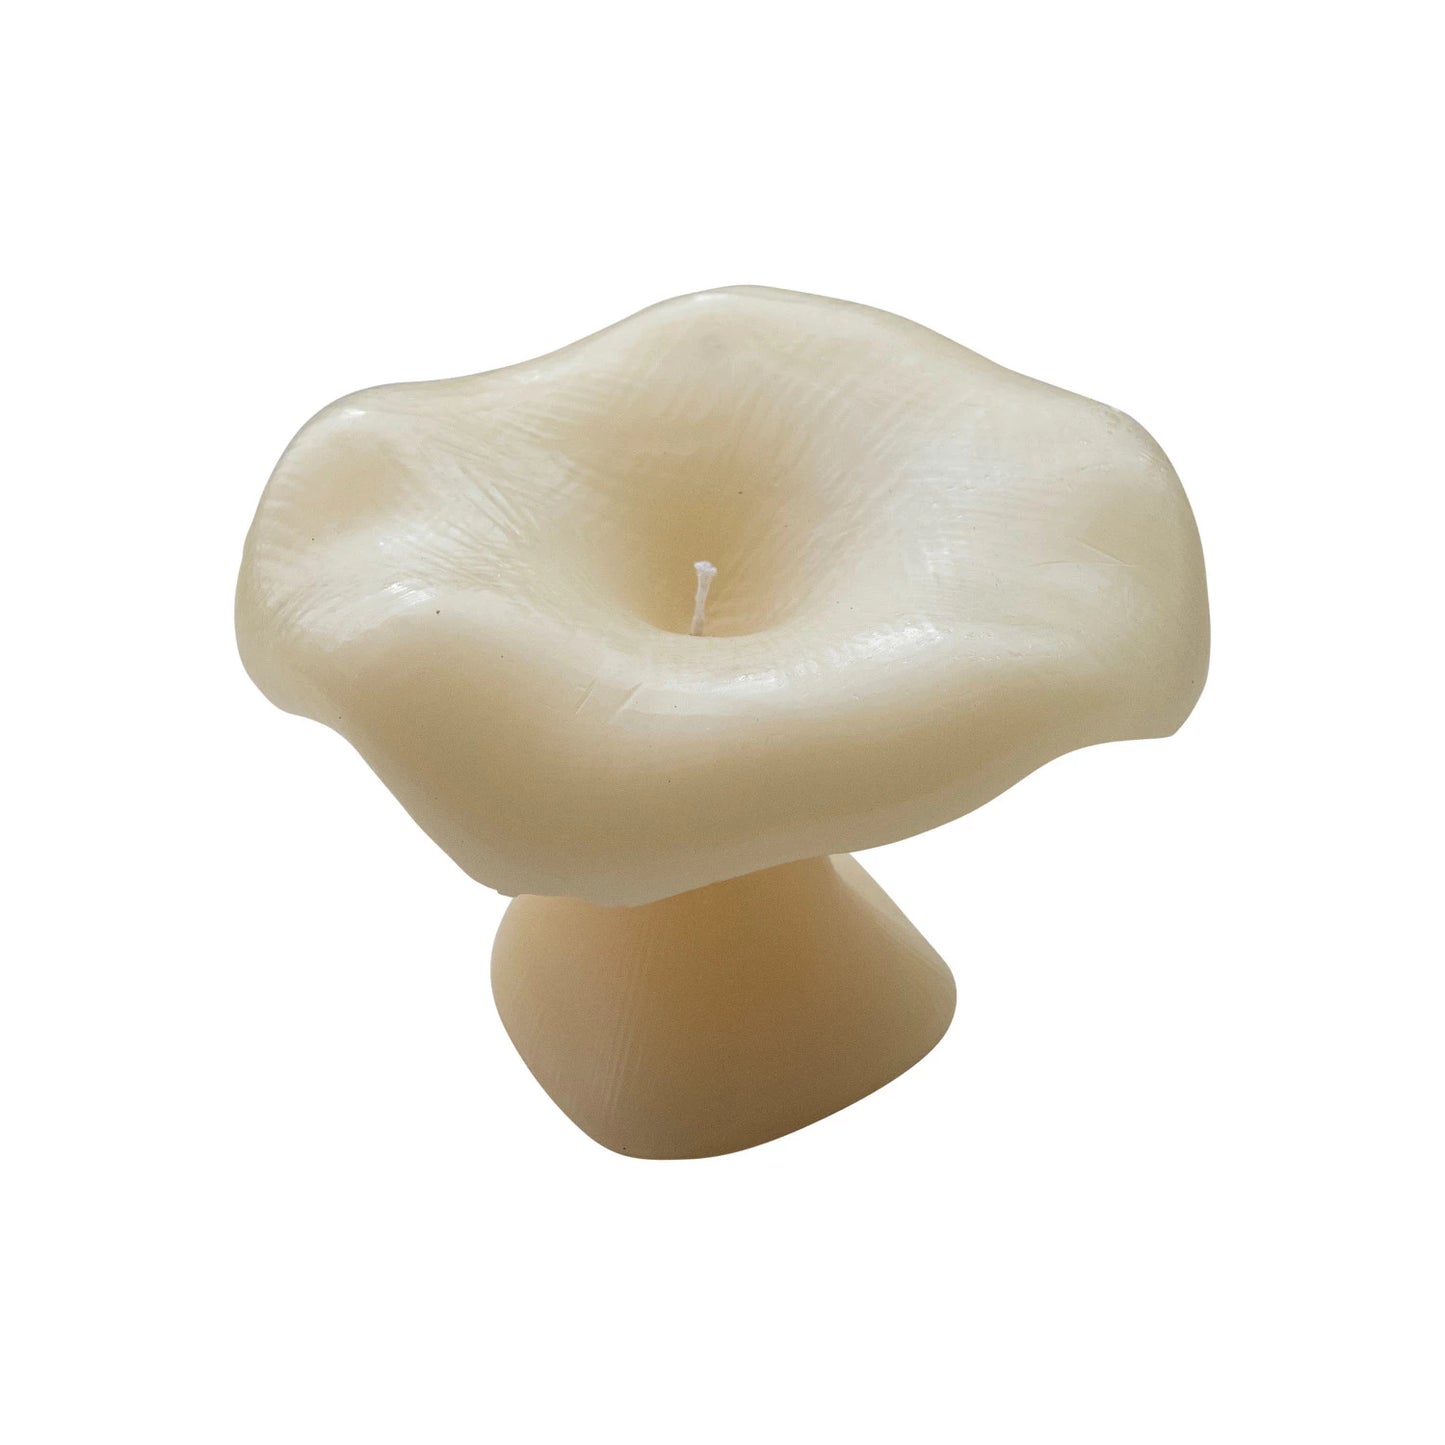 Mushroom Shaped Candles - Large Individual